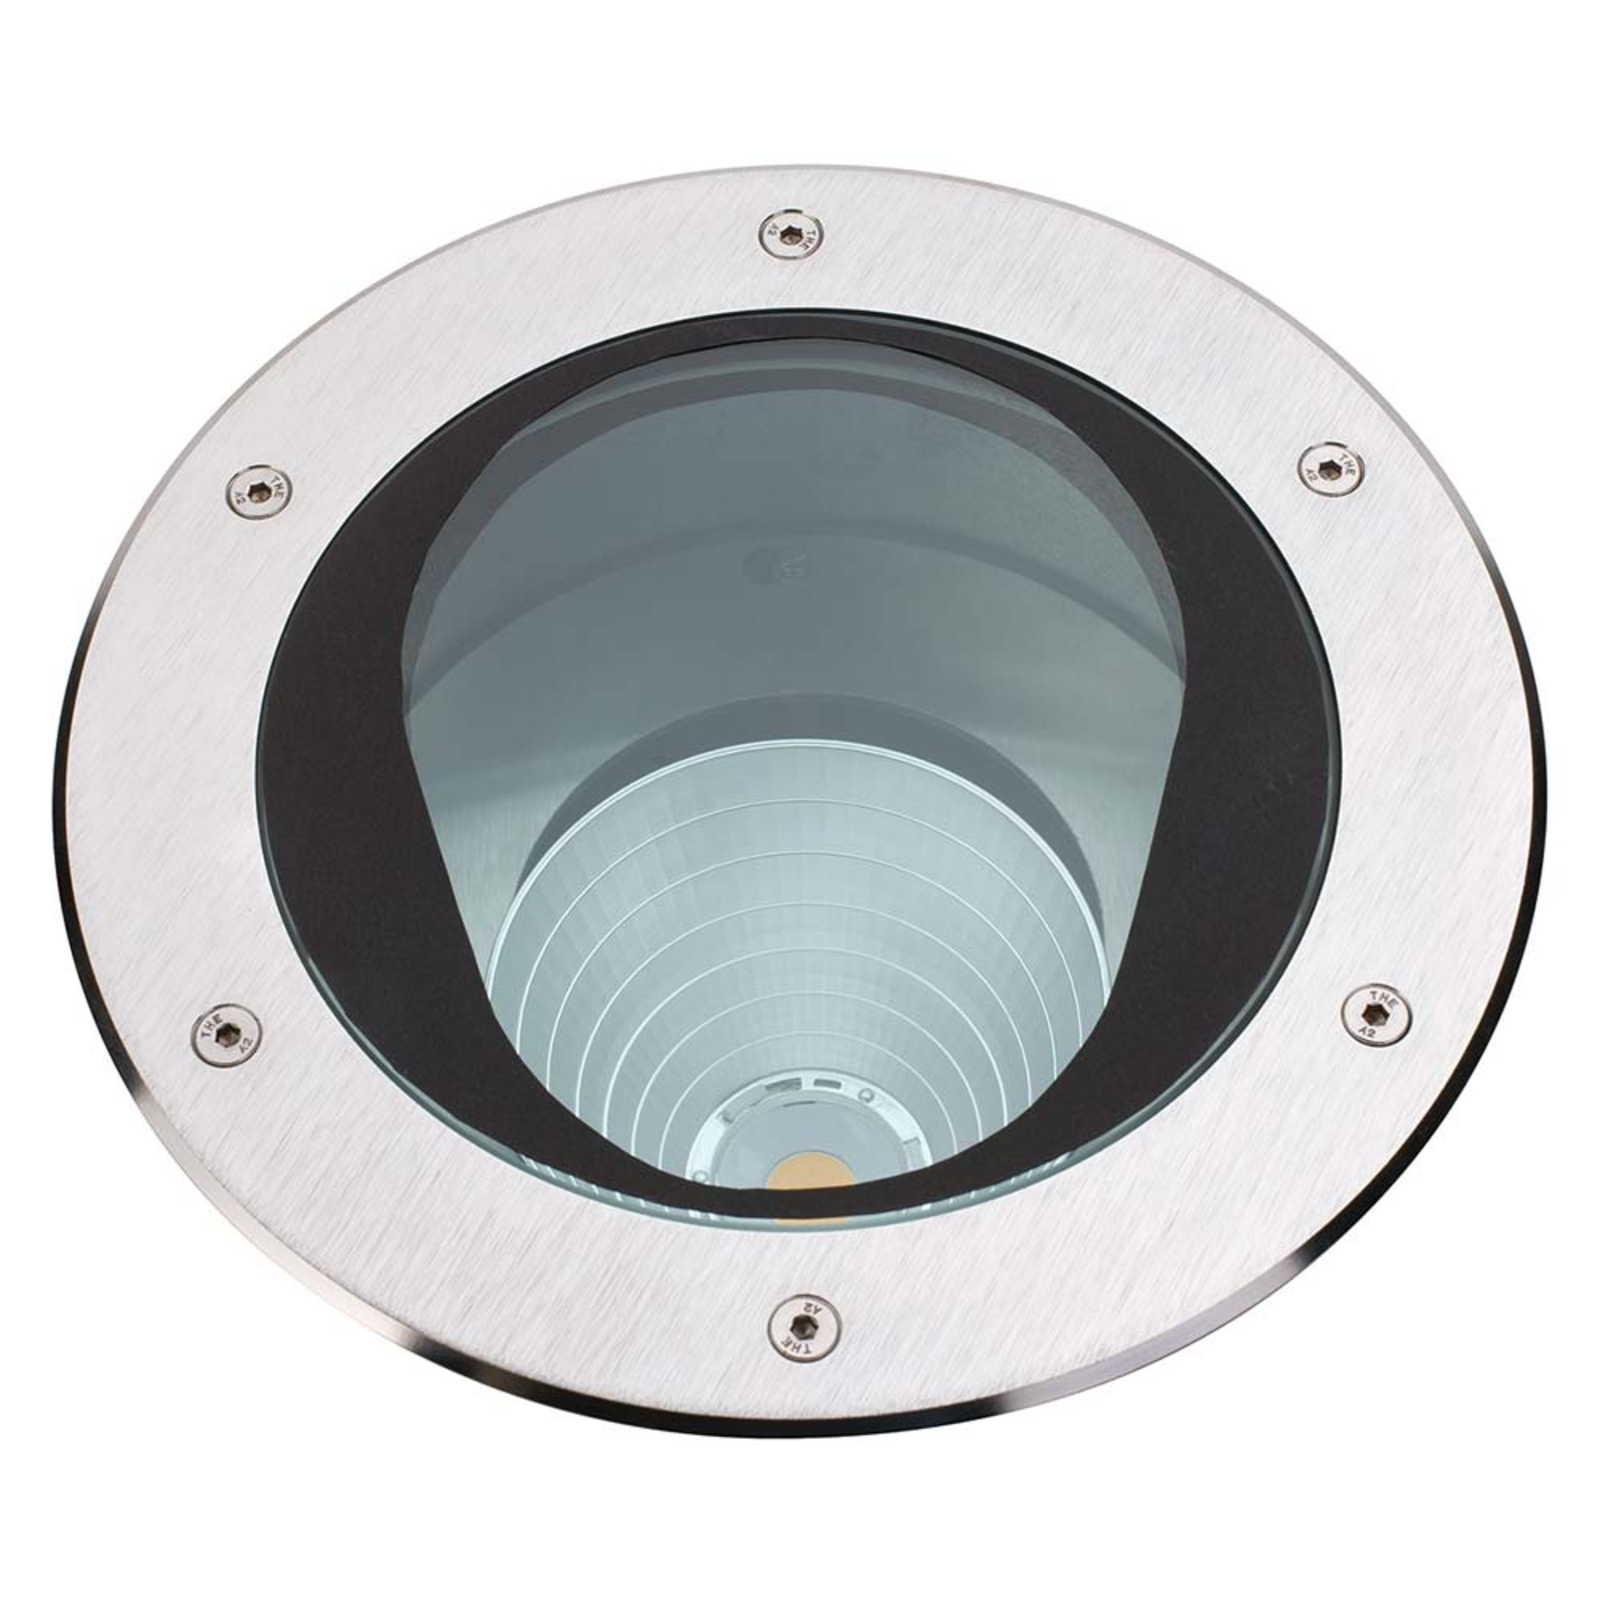 Onzorgvuldigheid Jeugd Resoneer LED grondspot inbouwlamp Titus 32W - kantelbaar | Lampen24.be